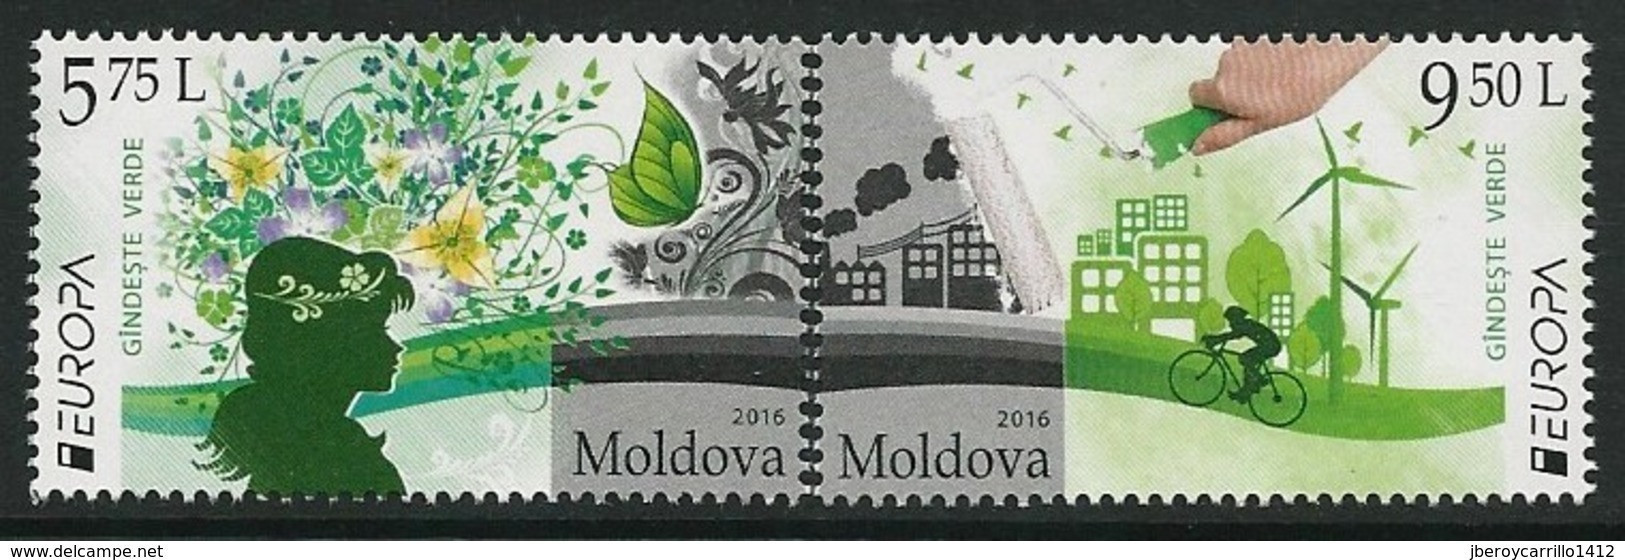 MOLDOVA/ MOLDAWIEN/ MOLDAVIA -  EUROPA 2016 -THEME " ECOLOGIE- EL PENSAMIENTO VERDE- THINK GREEN".- SERIE 2 V. - 2016